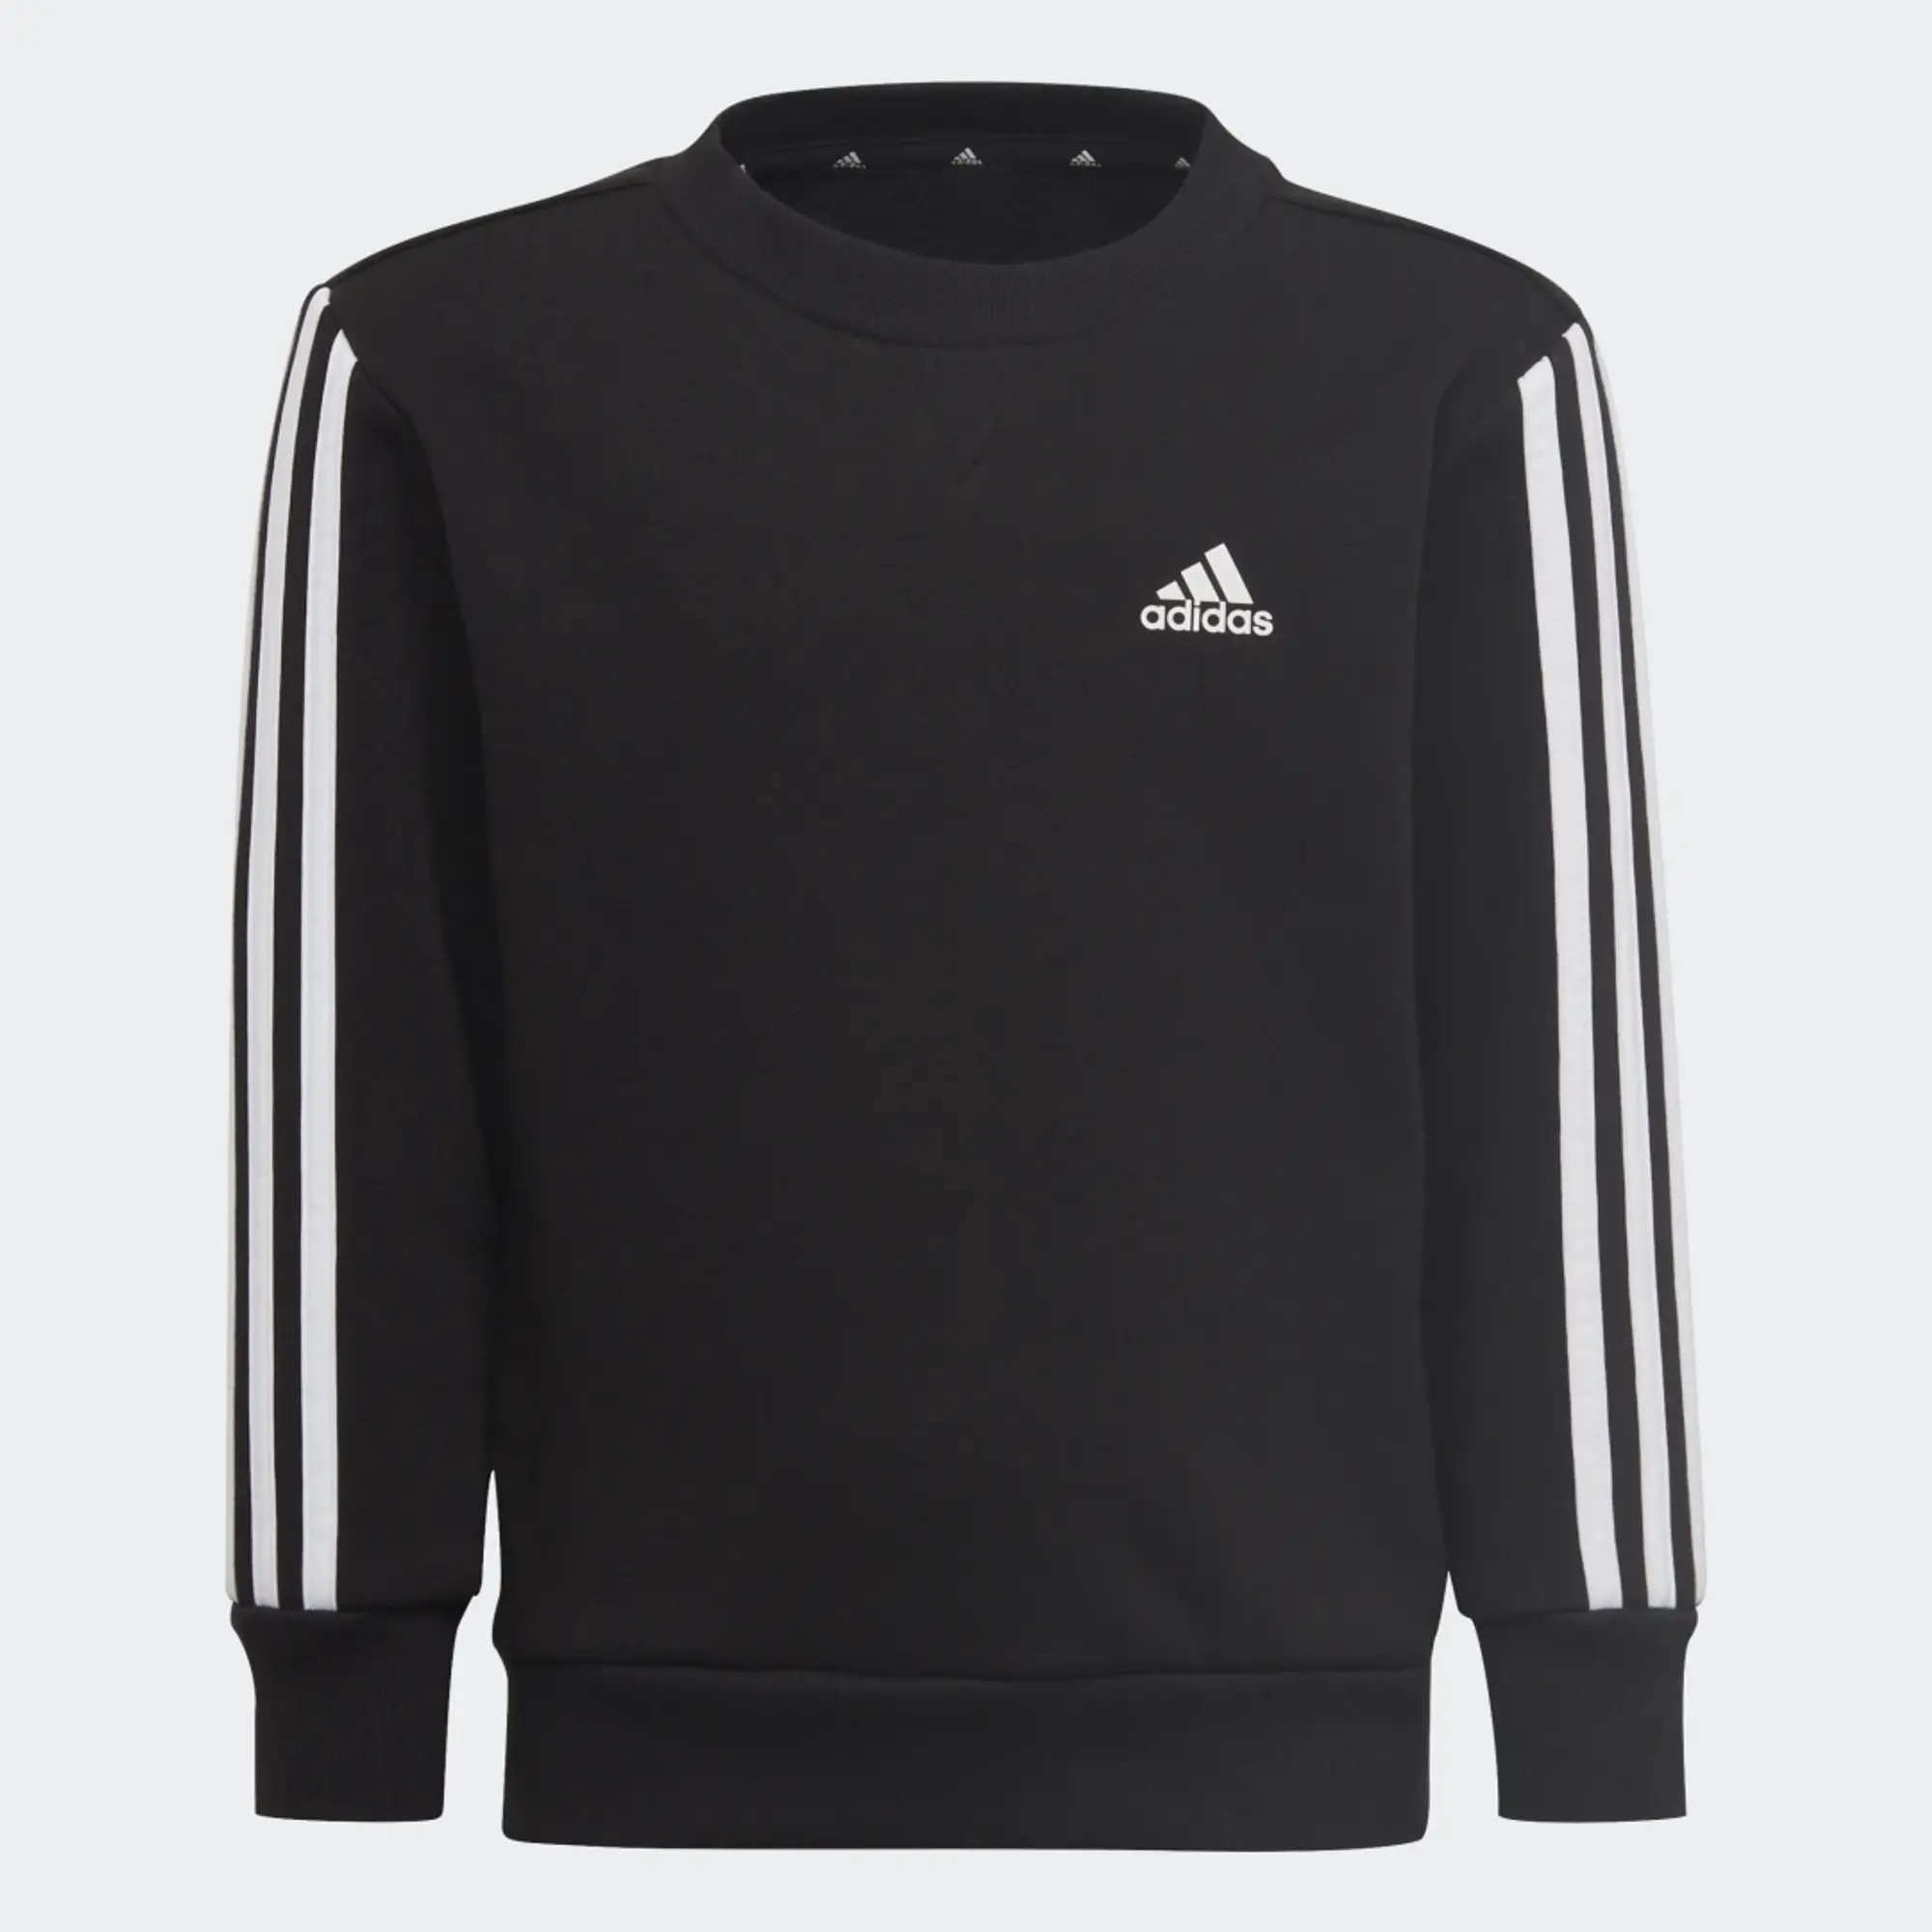 adidas Essentials 3-Stripes Crewneck Sweatshirt - Black / White